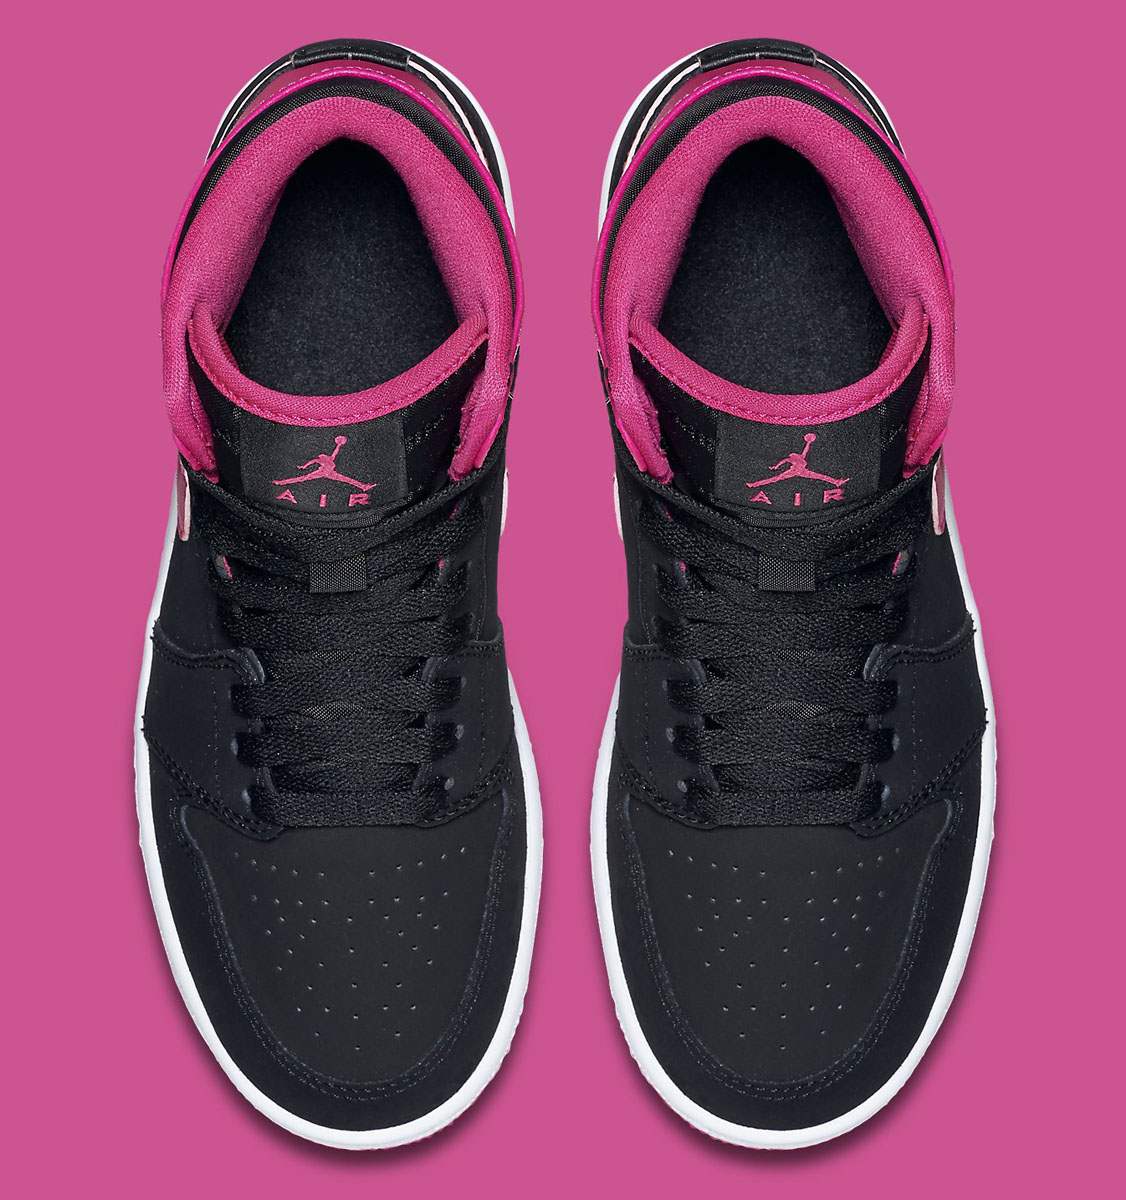 Air Jordan 1 High Girls Black/Pink (5)